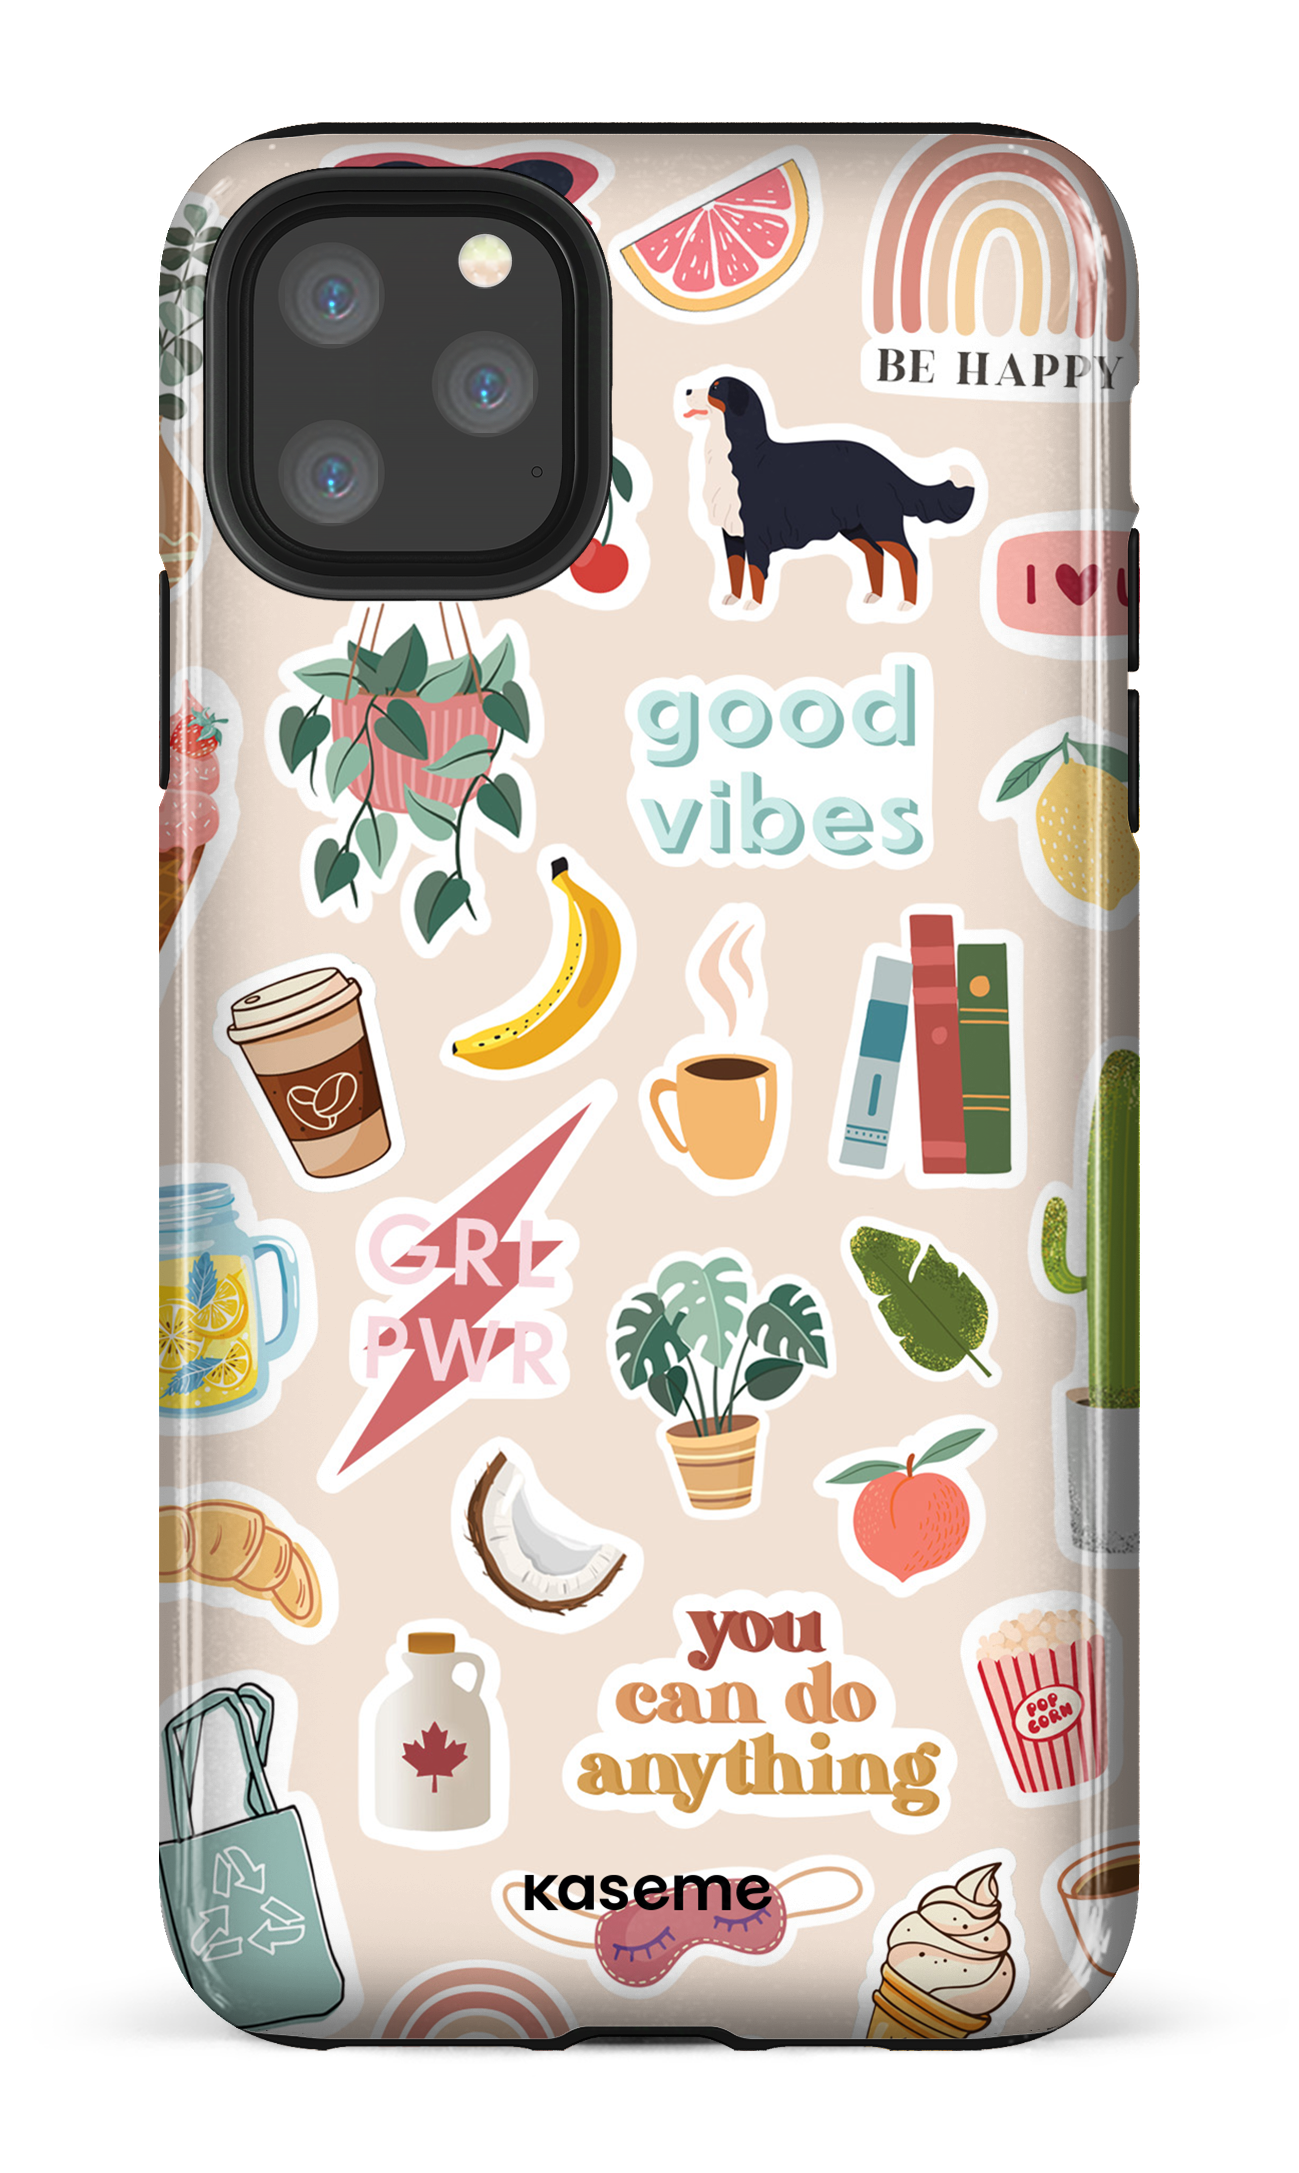 Good vibes - iPhone 11 Pro Max